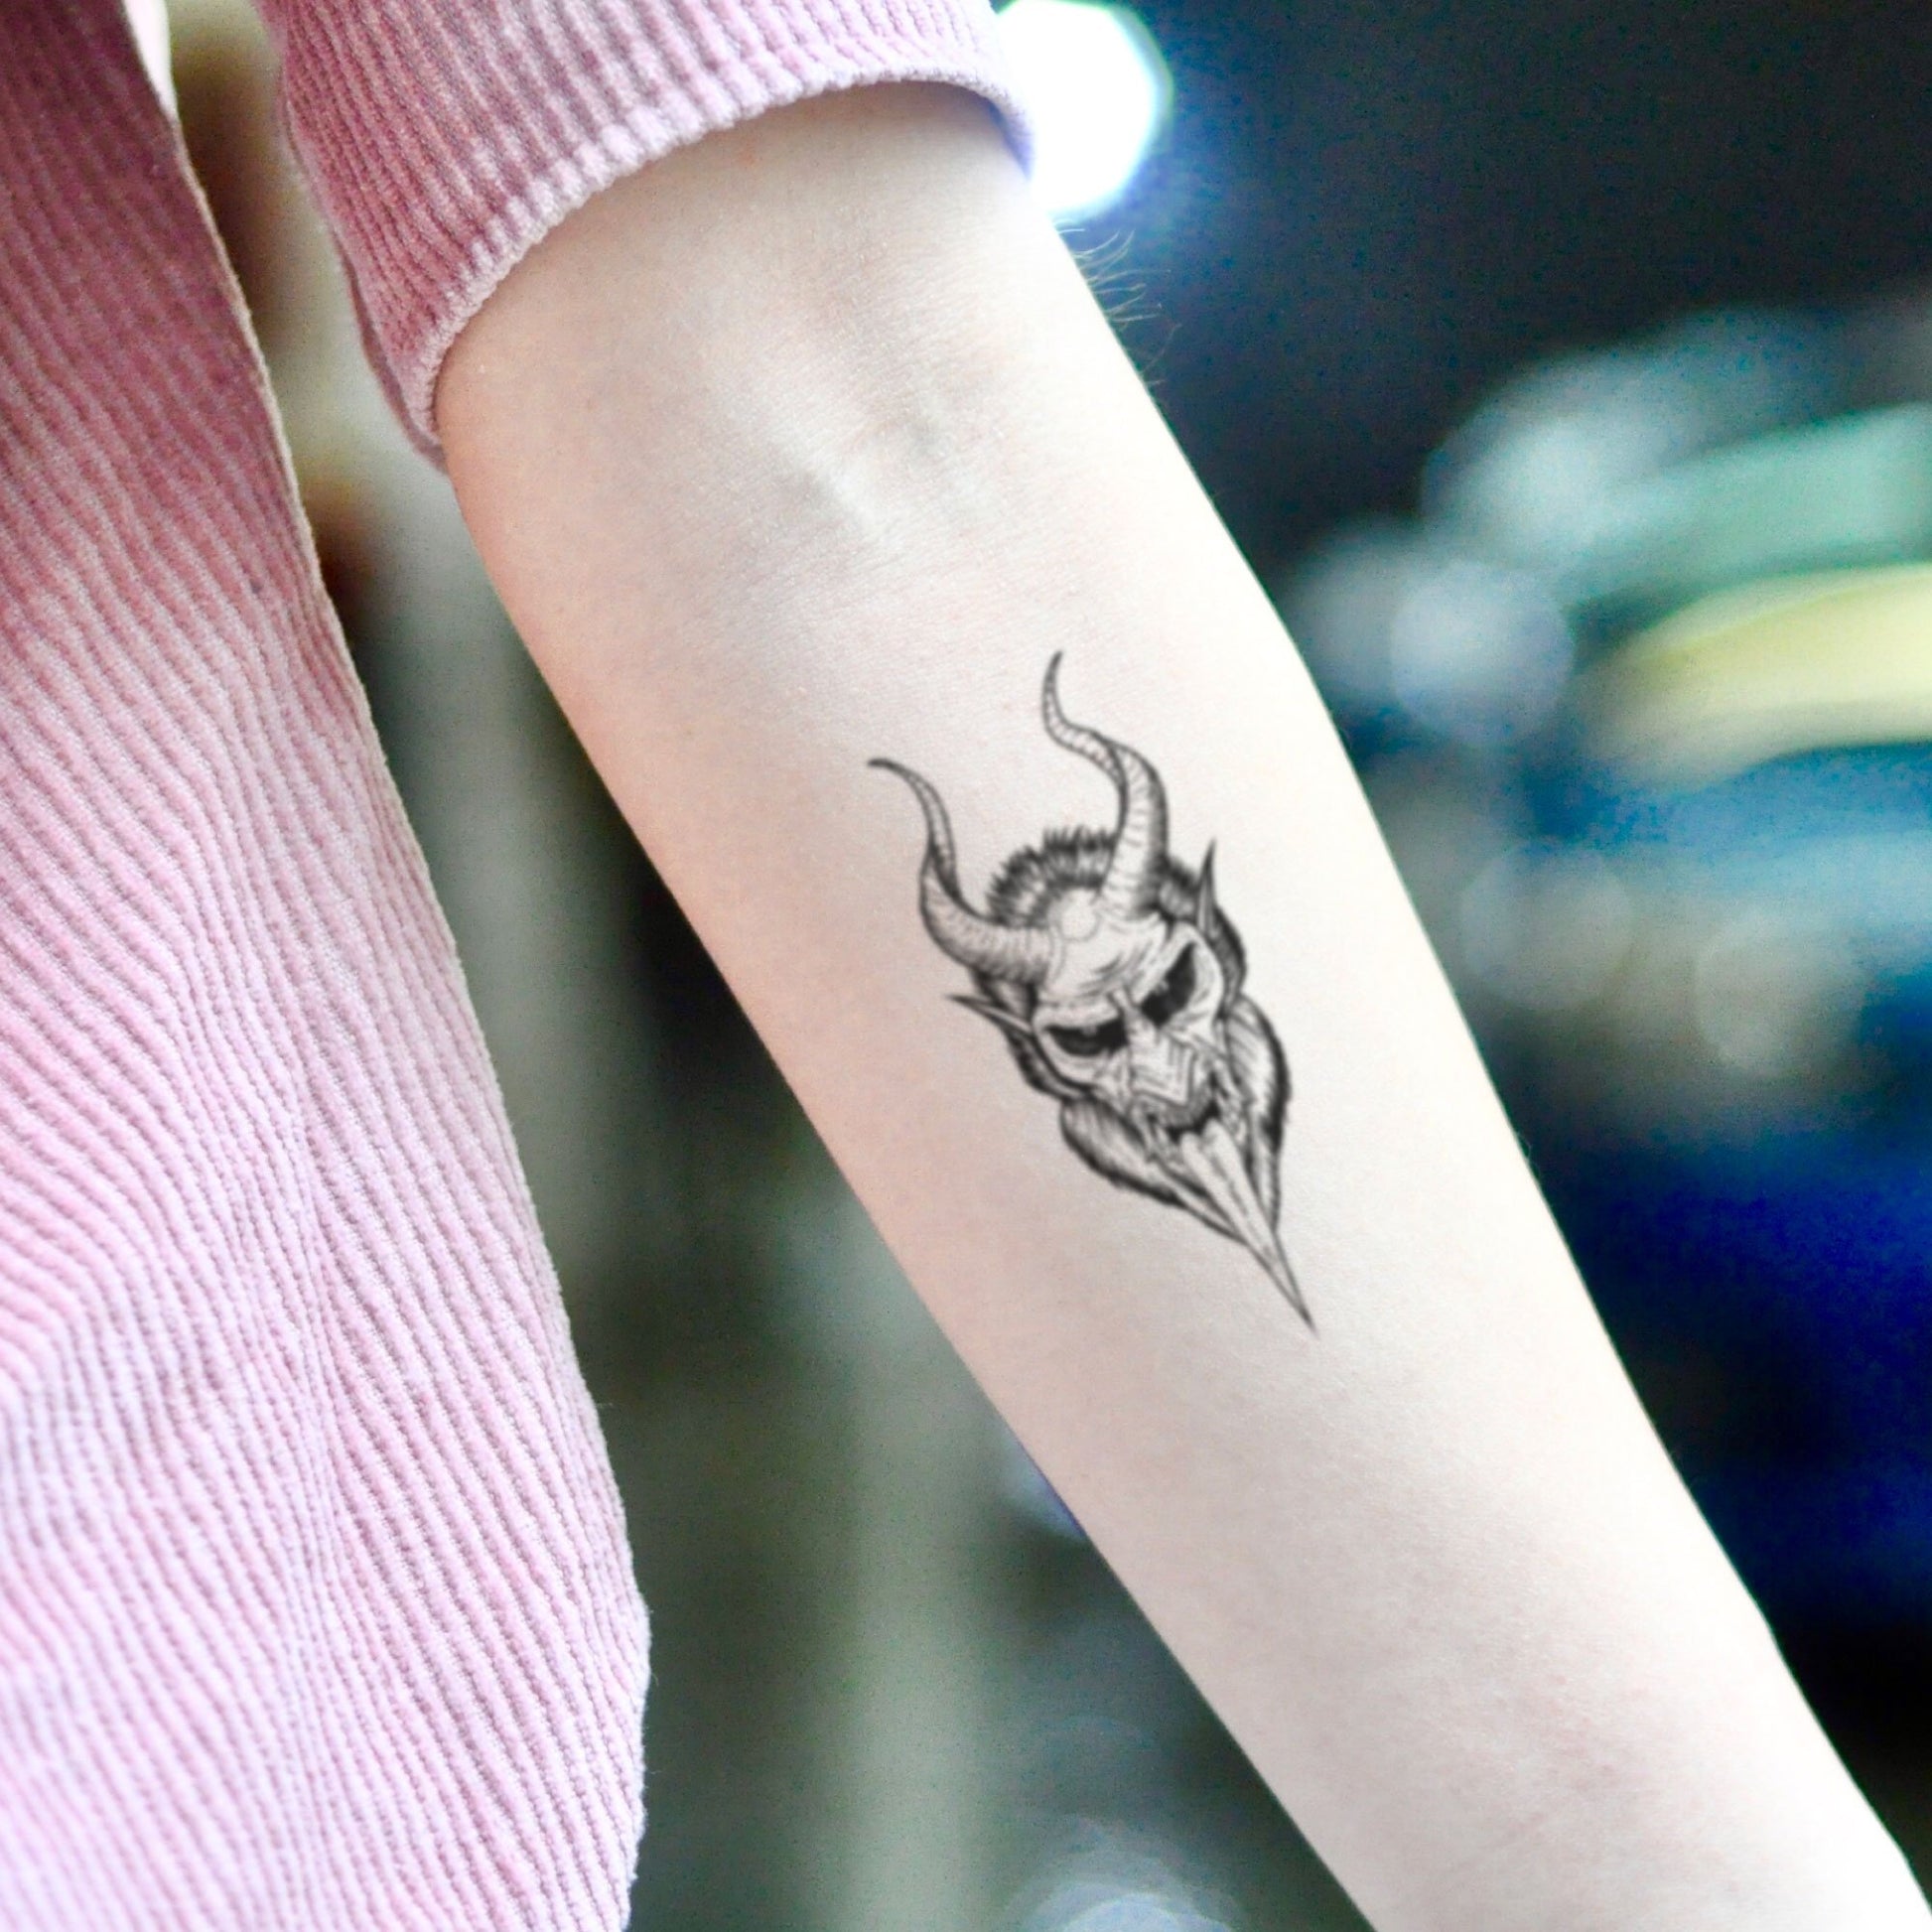 fake small krampus illustrative temporary tattoo sticker design idea on inner arm